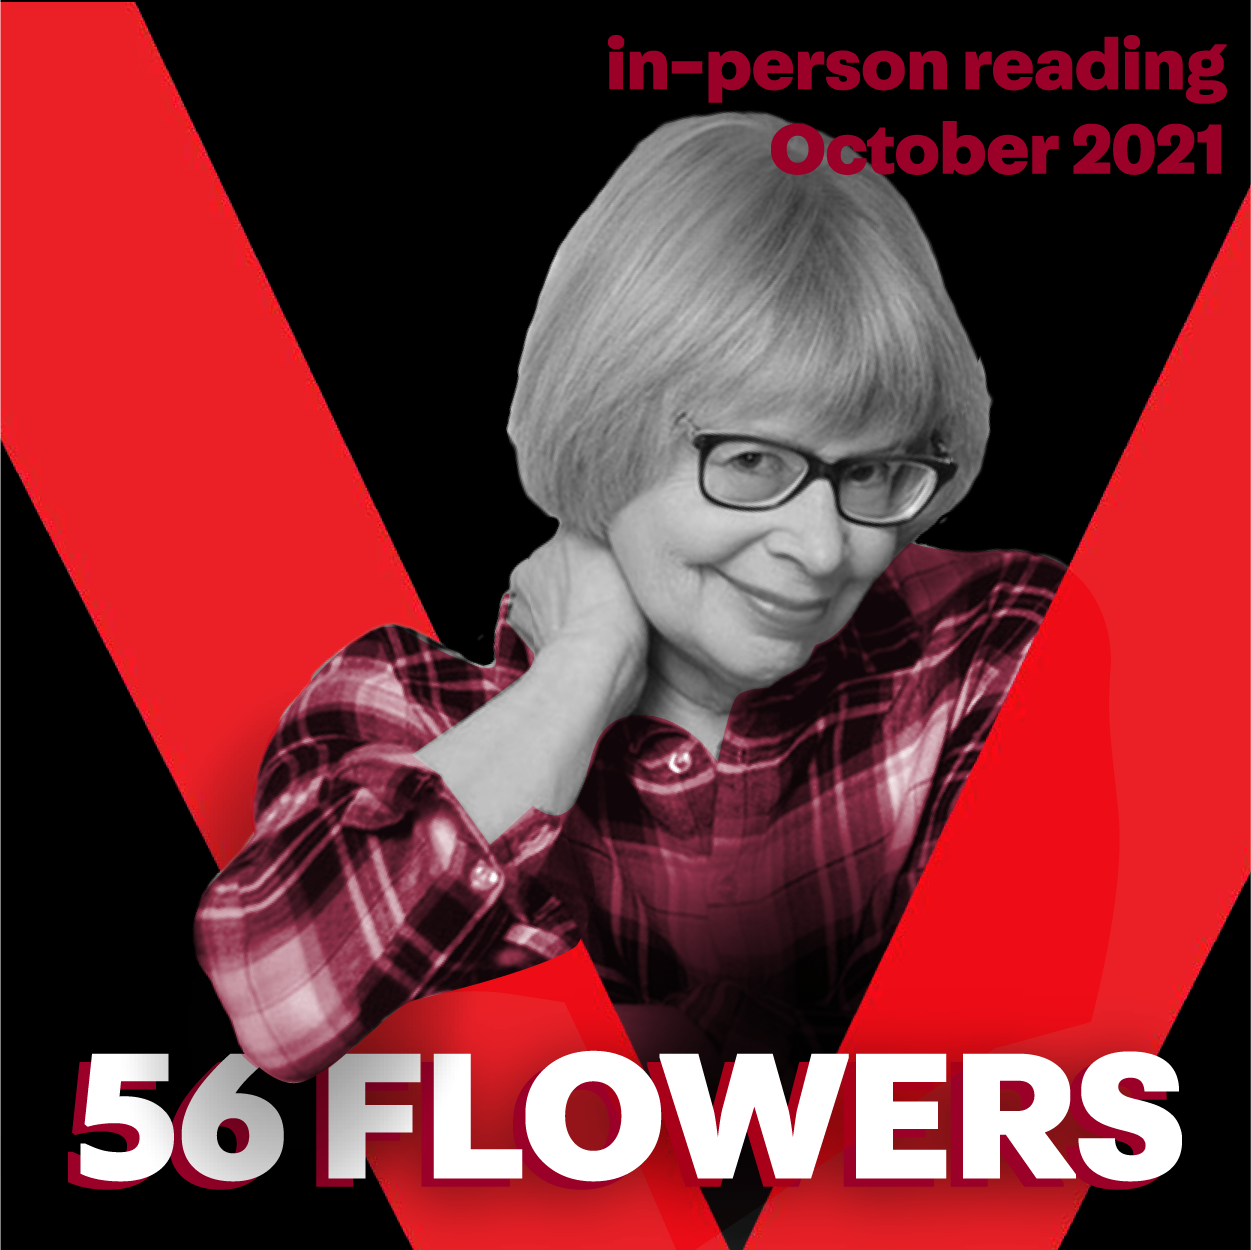 56 Flowers